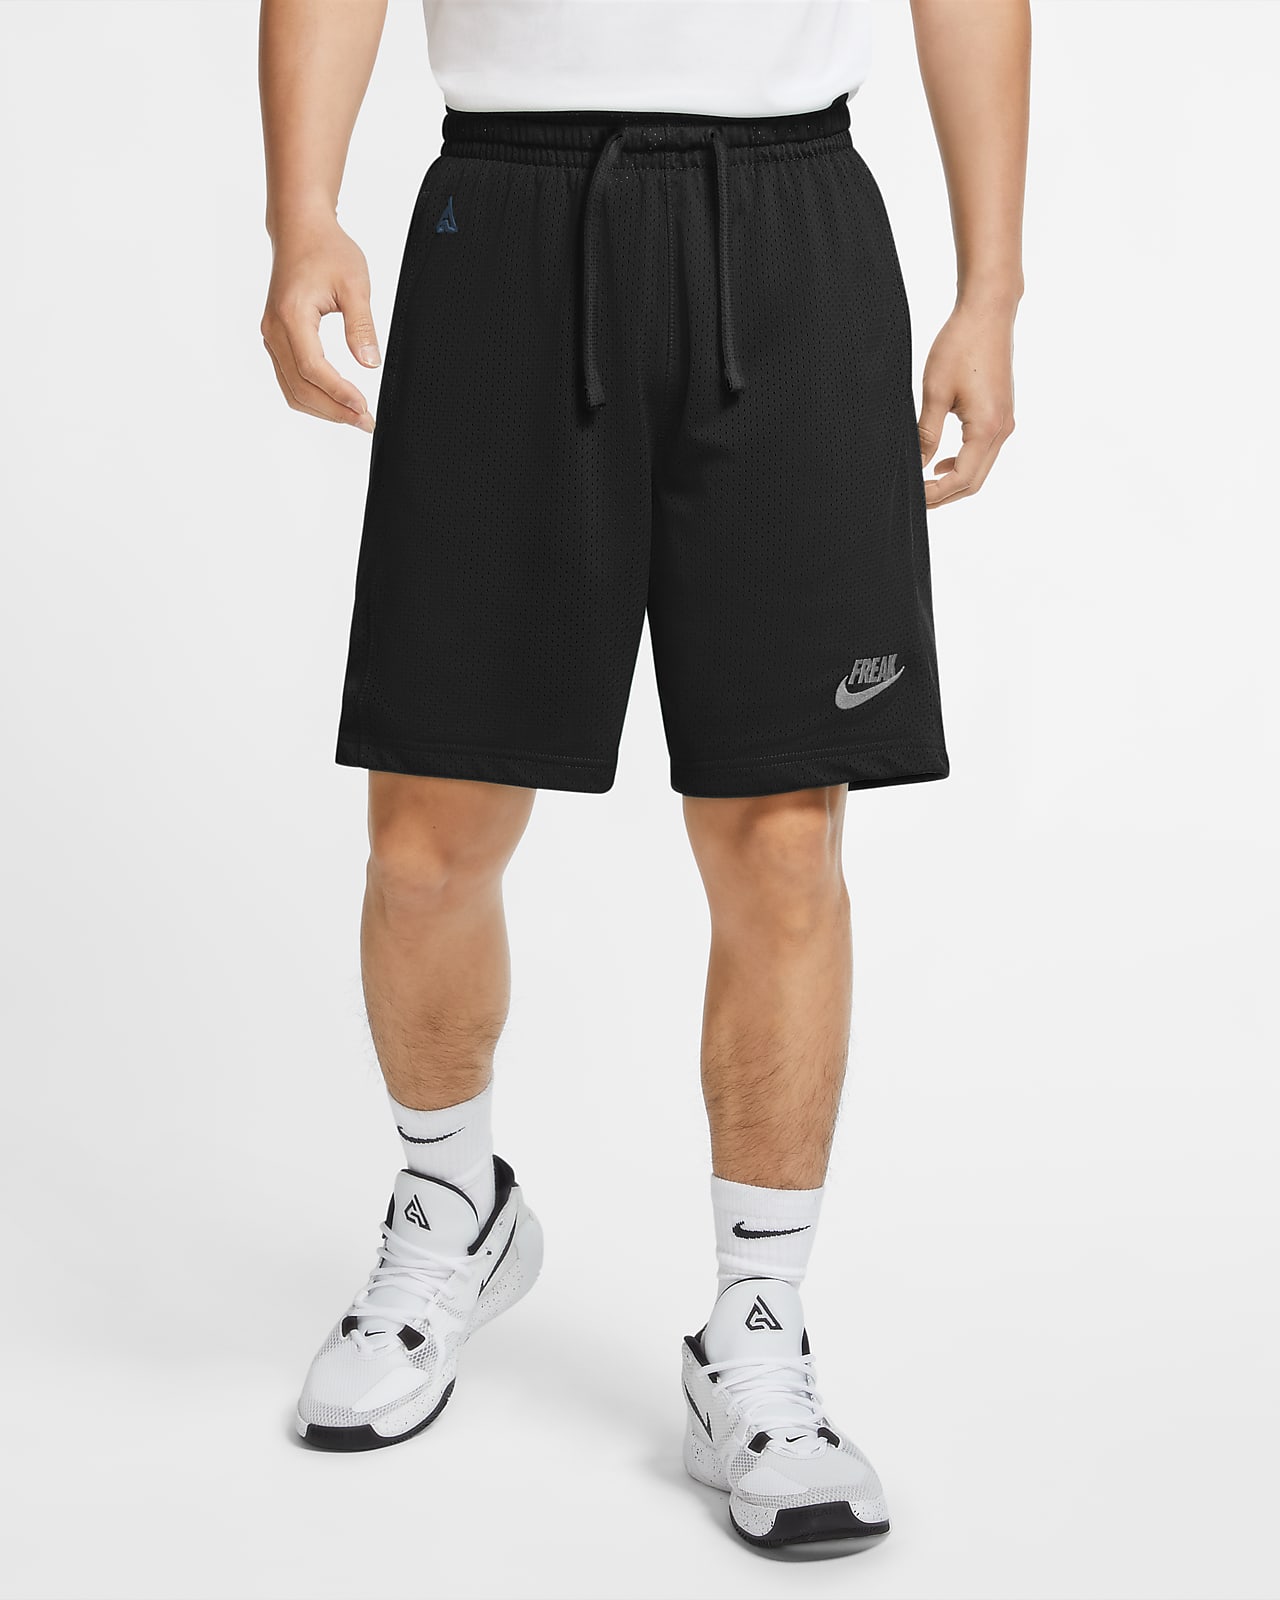 giannis basketball shorts